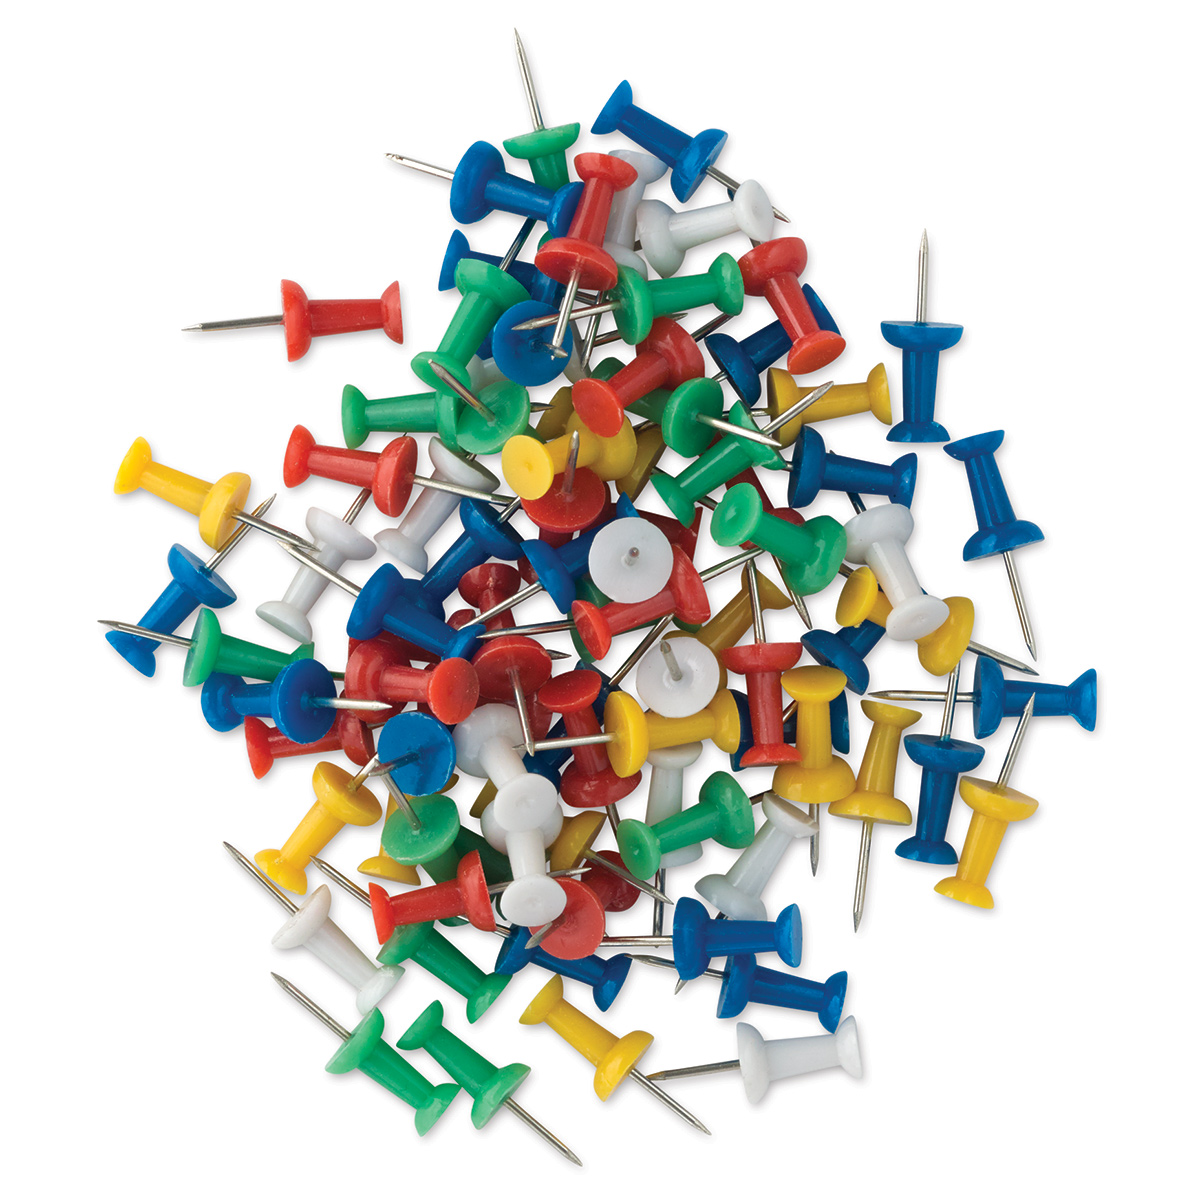 OFBK 100 Pieces Colors Thumbtack Cute Roundness Decorative Push